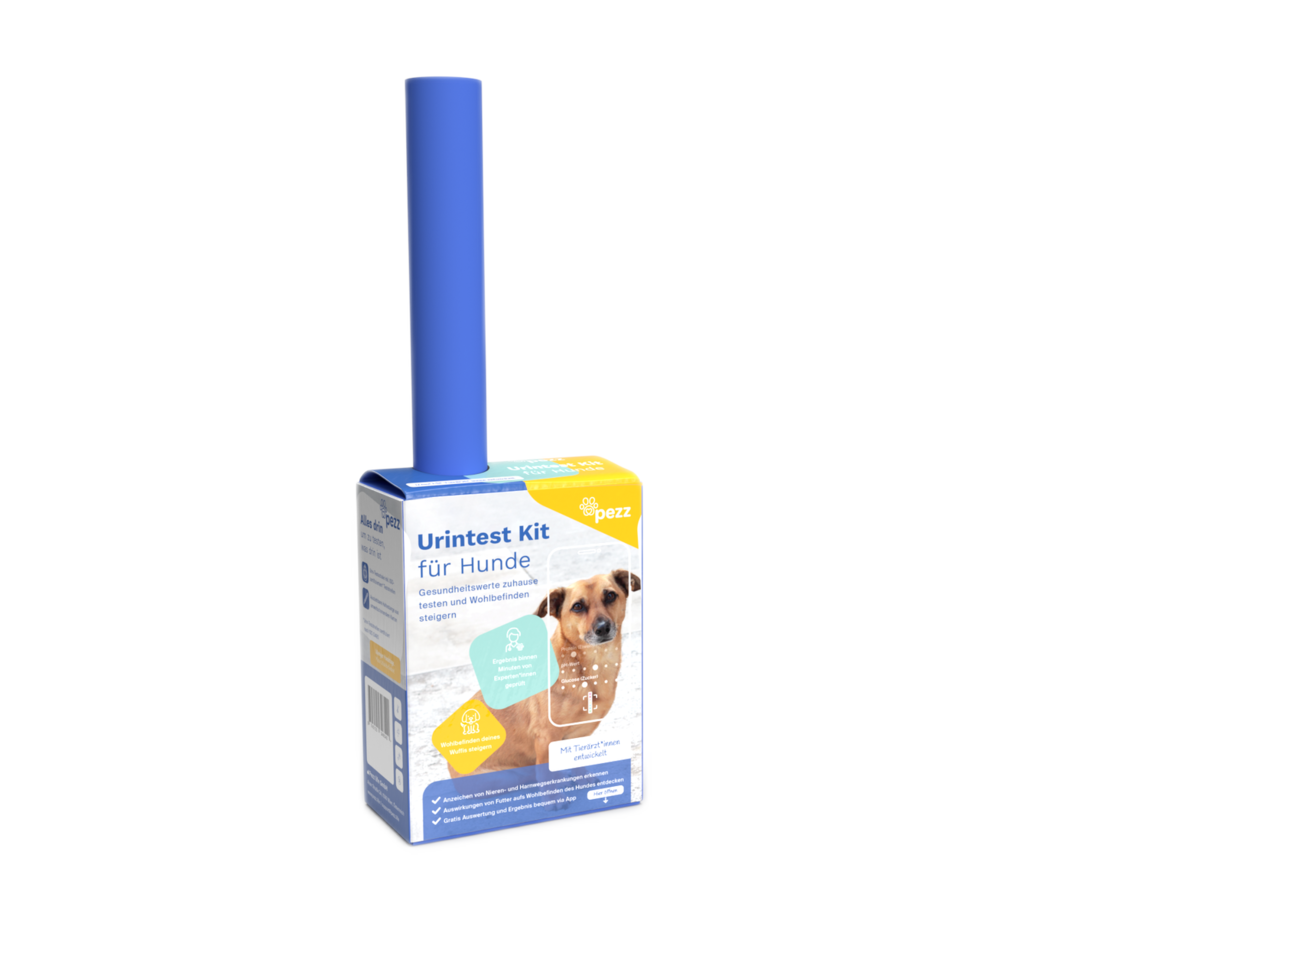 Pezz life | Urintest Kit für Hunde